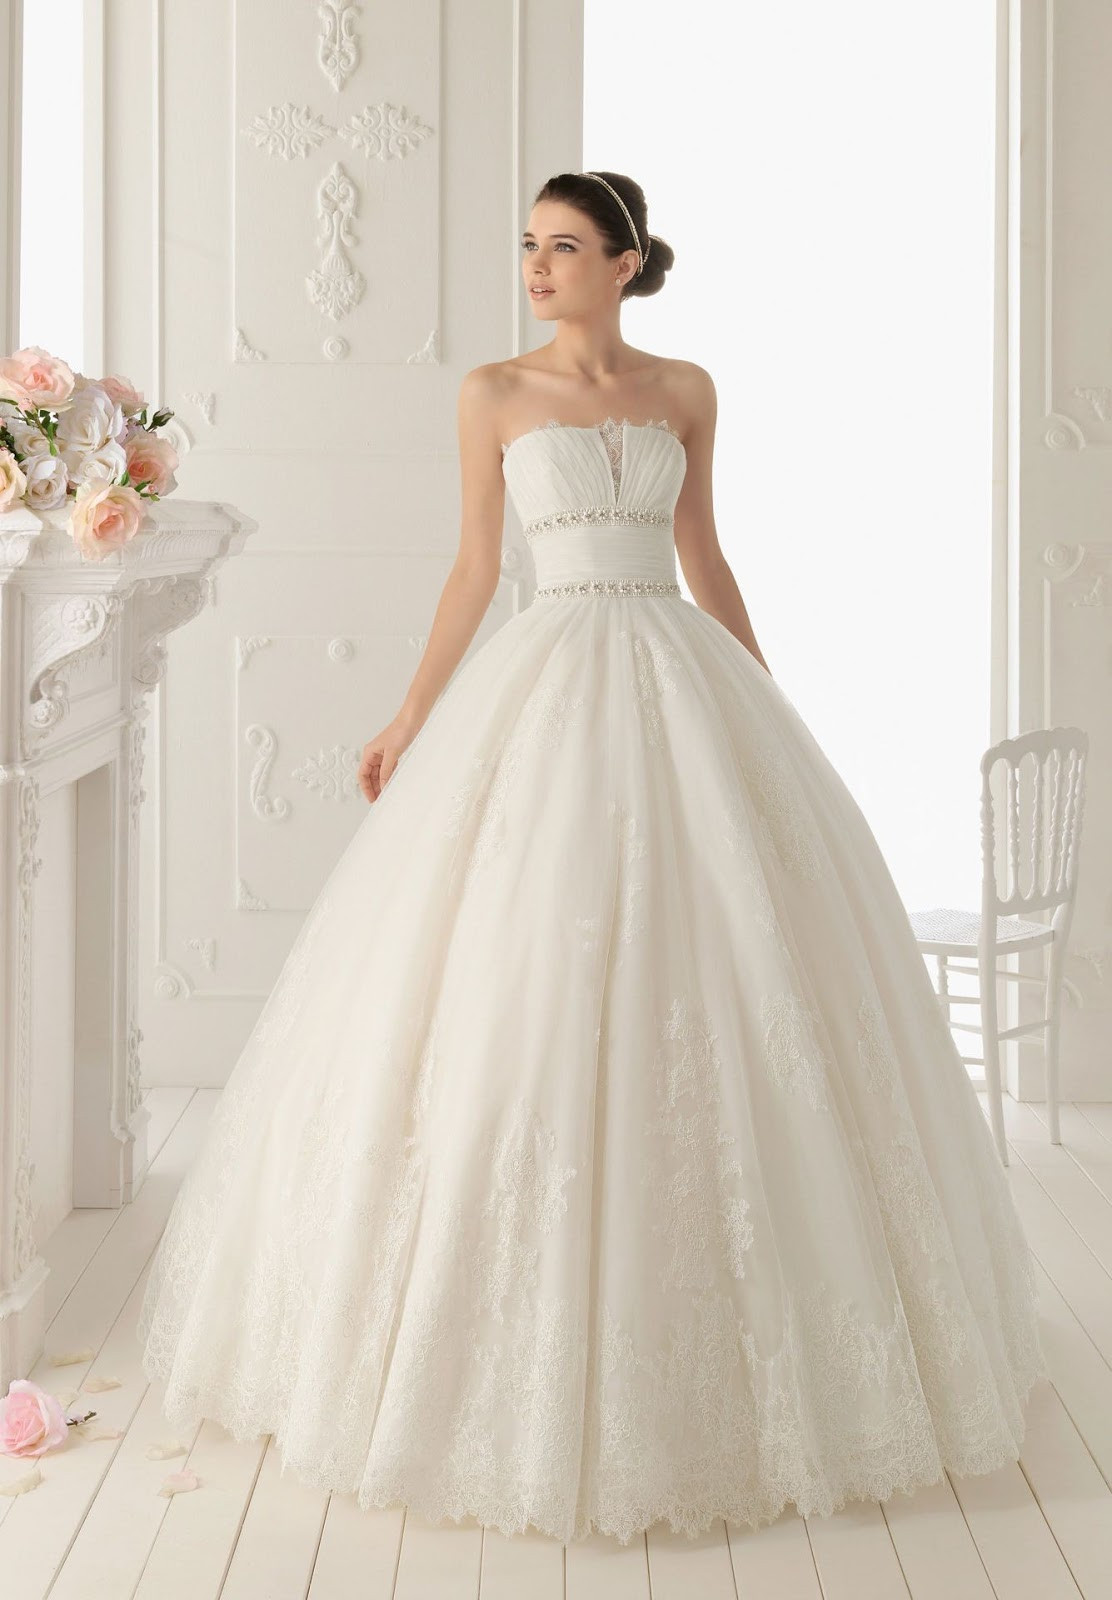 Lace Ball Gown Wedding Dresses
 WhiteAzalea Ball Gowns Lace Ball Gown Wedding Dress